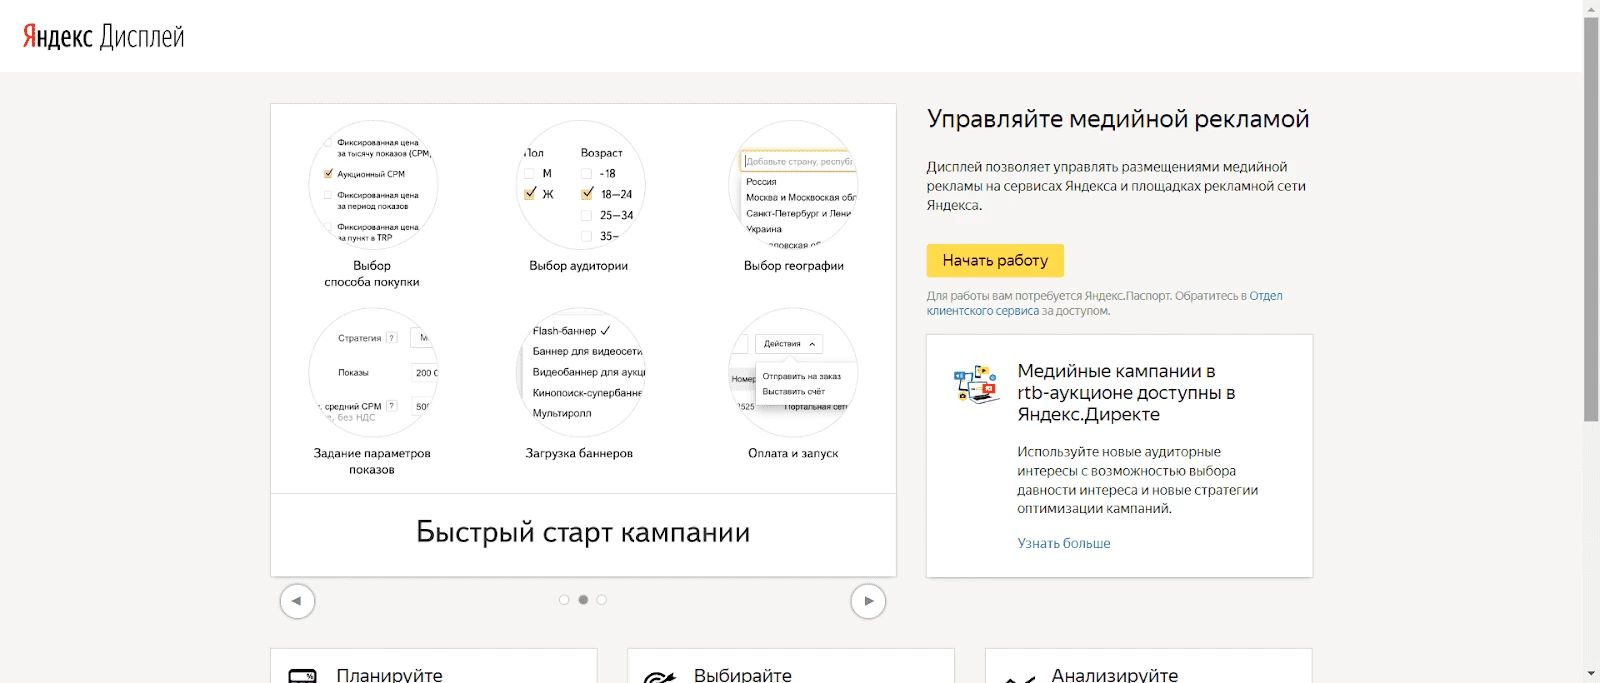 Яндекс.Директ – популярная программатик-платформа